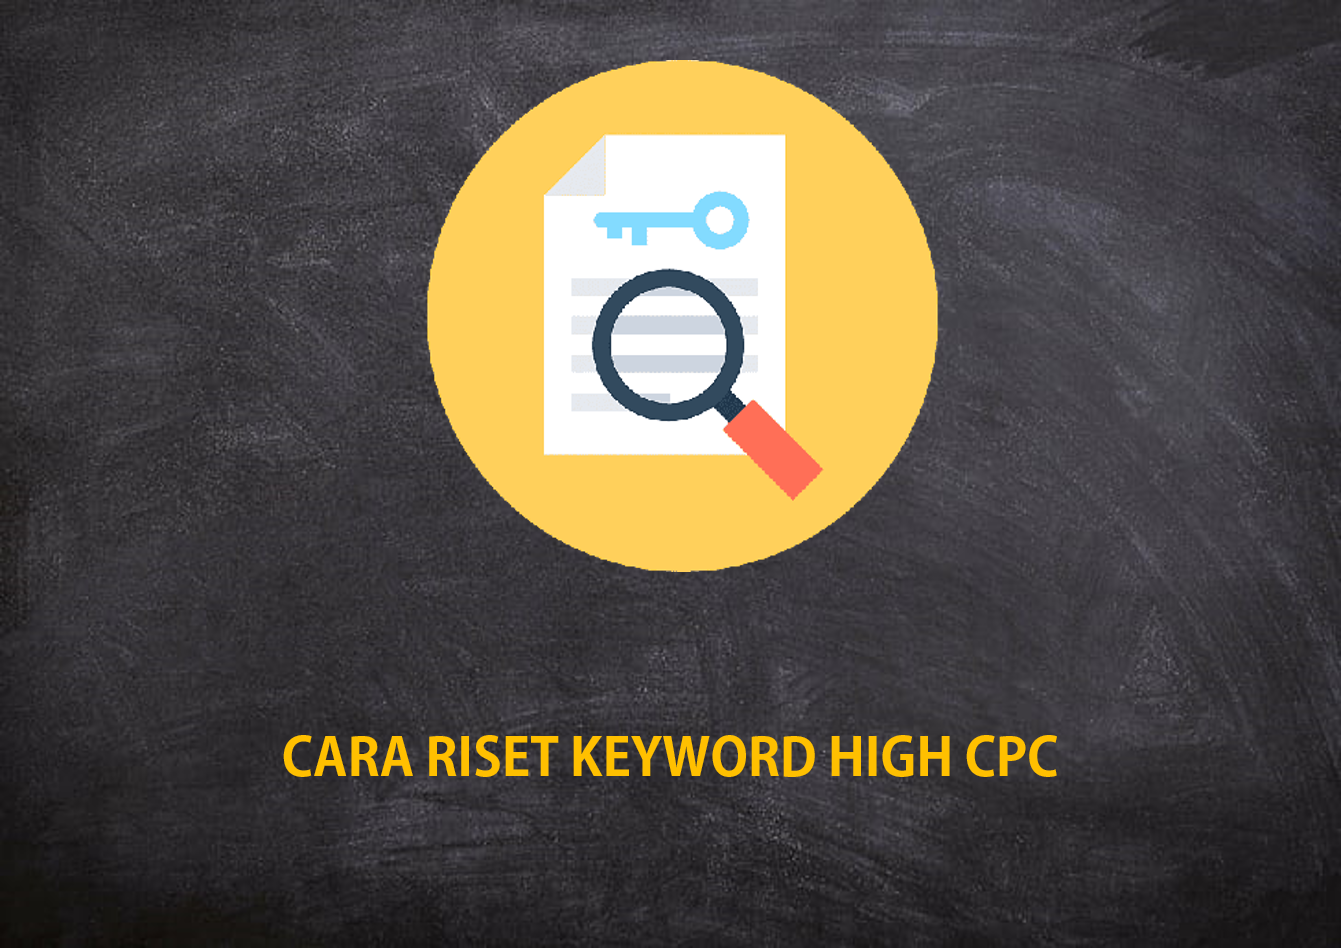 Cara riset Keyword yang dapat membuat CPC Adsense tinggi